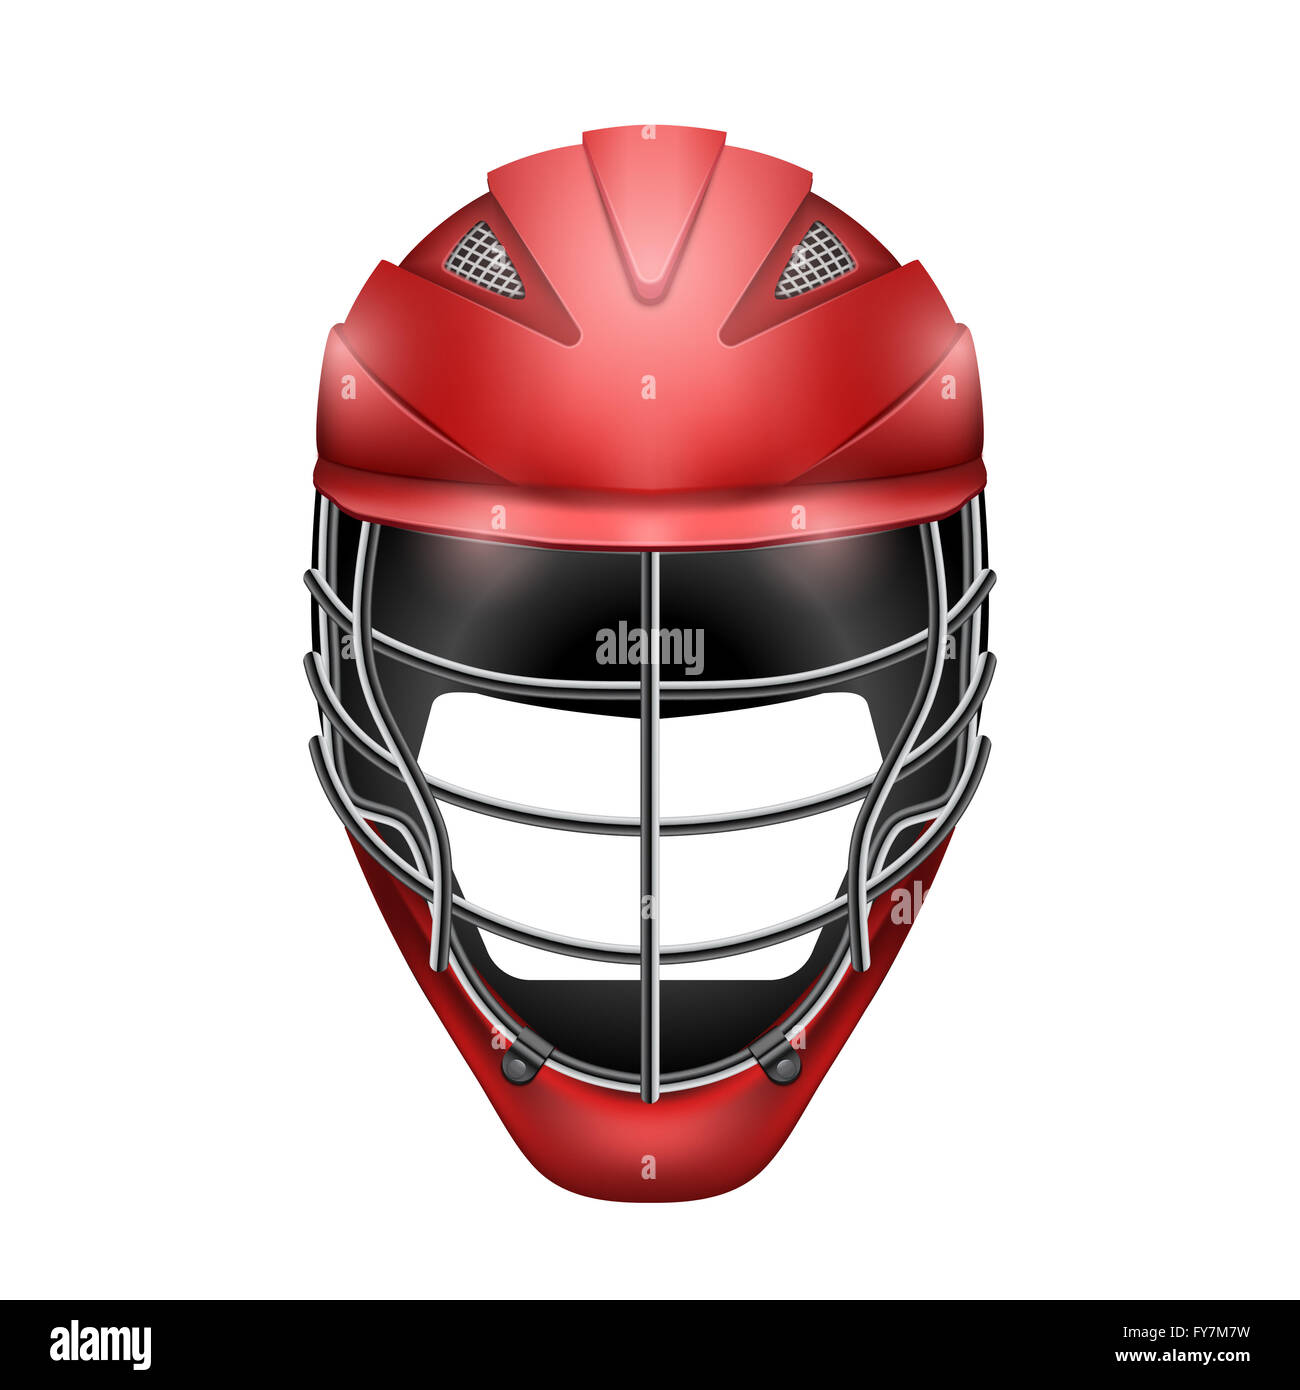 Lacrosse-Helm-Vorderansicht Stockfoto